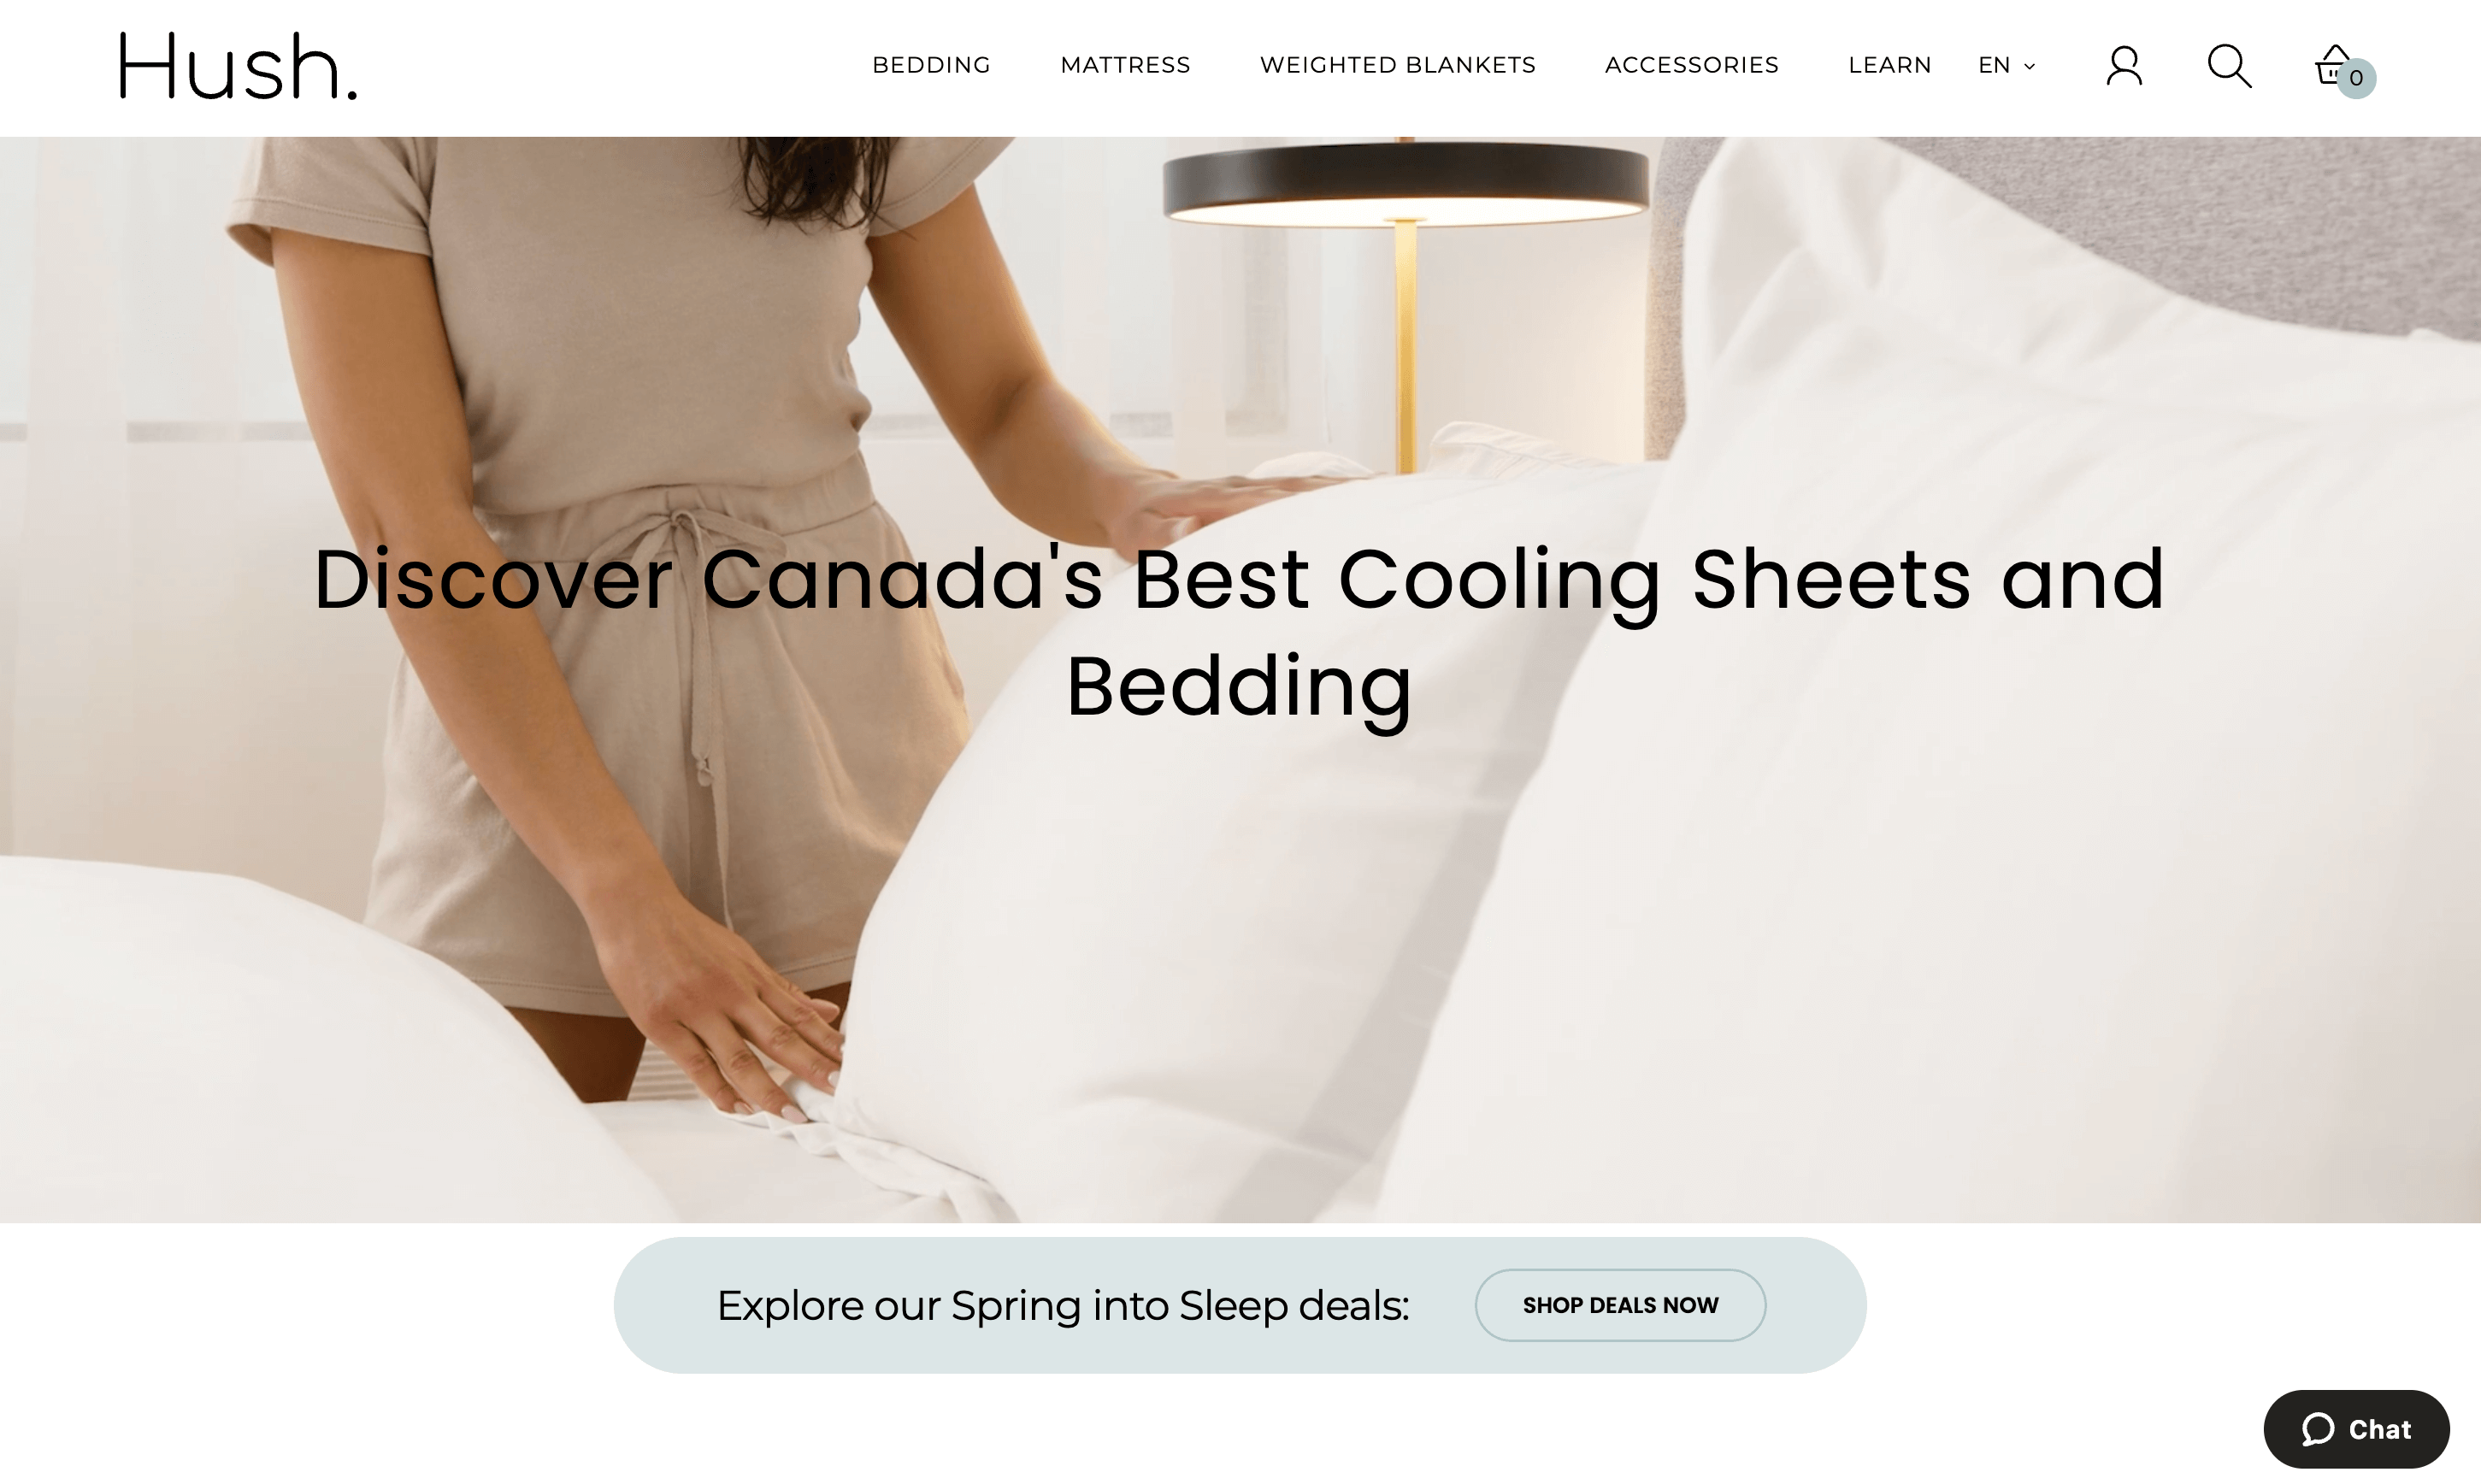 Hush 主页的屏幕截图显示有人用降温床单铺床的图片。